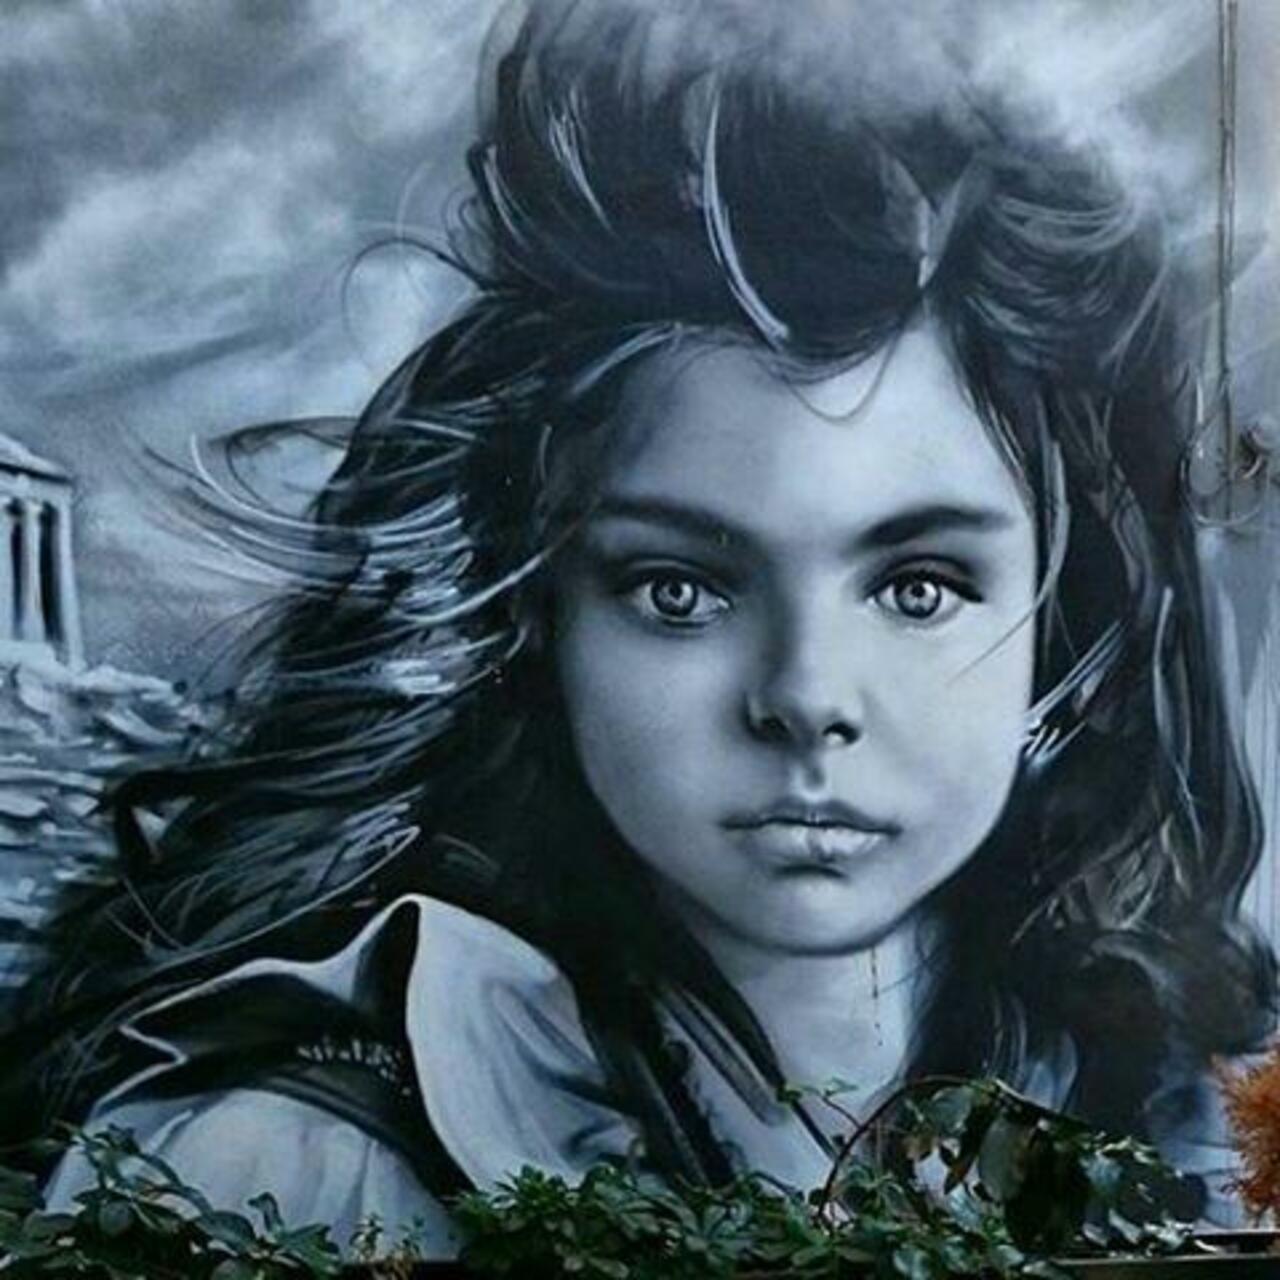 RT @weigeltw: Awesome #streetart was done by @simple_g_
 #artist.  Pic cred @Miiargh #graffitilegends #graffiti #streetart https://t.co/zi4rOpQDiJ